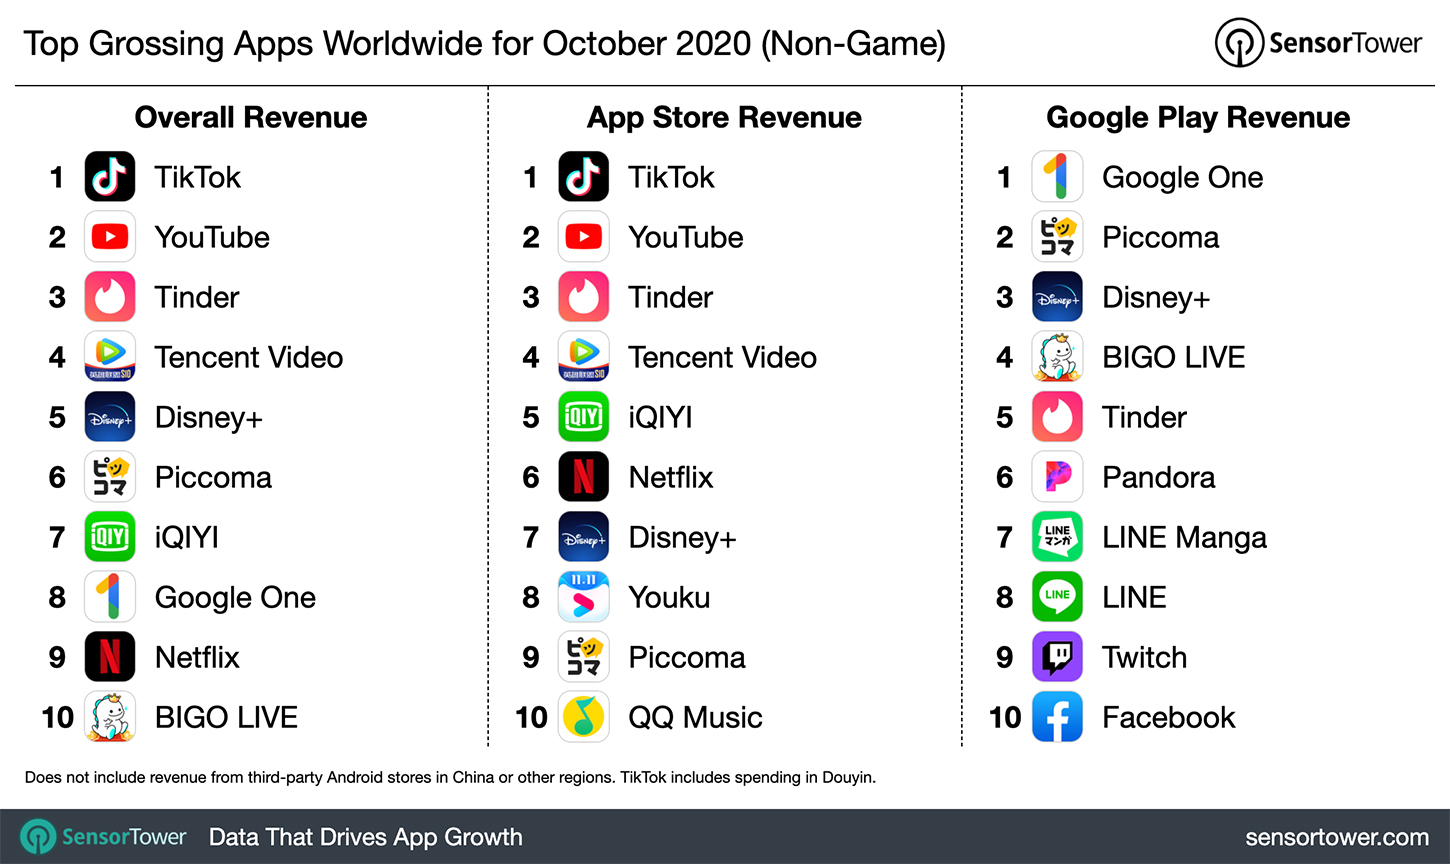 “Top Grossing Apps Worldwide for October 2020